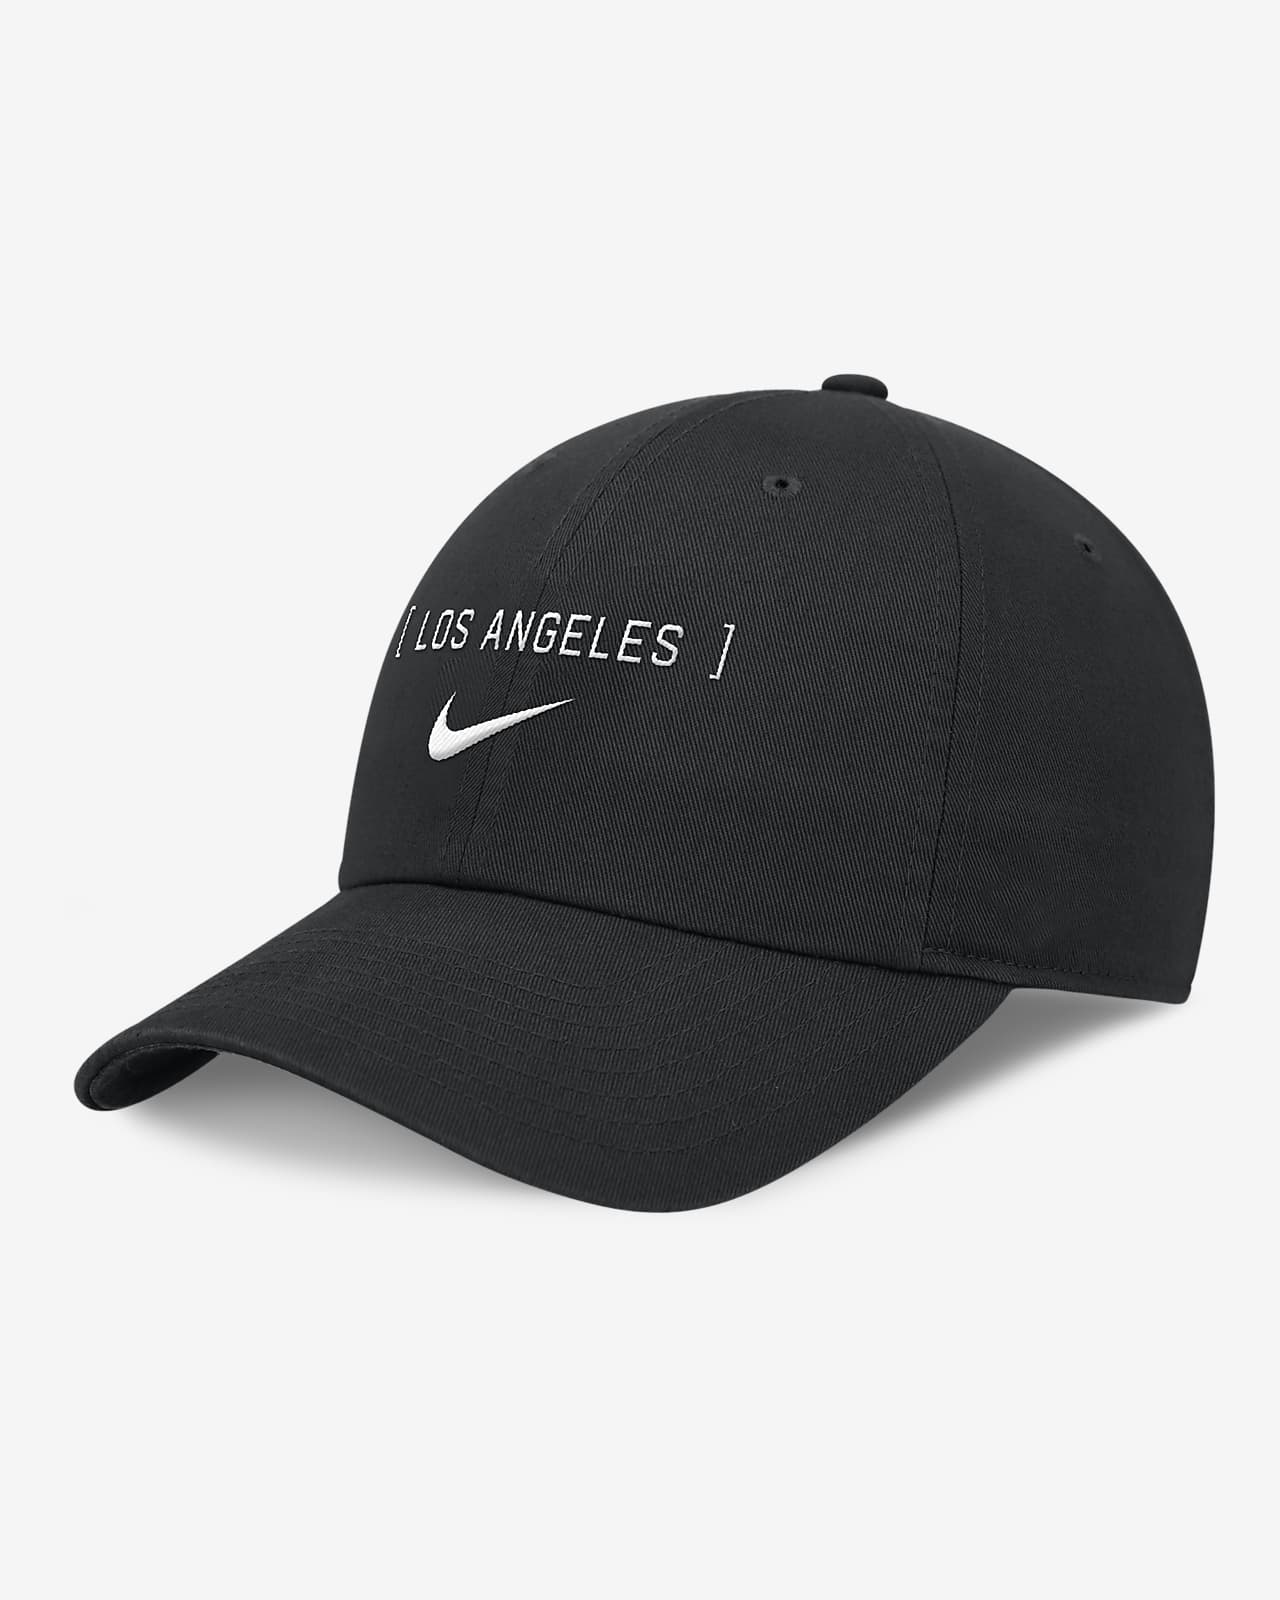 Los Angeles Dodgers Primetime Club Men's Nike MLB Adjustable Hat.